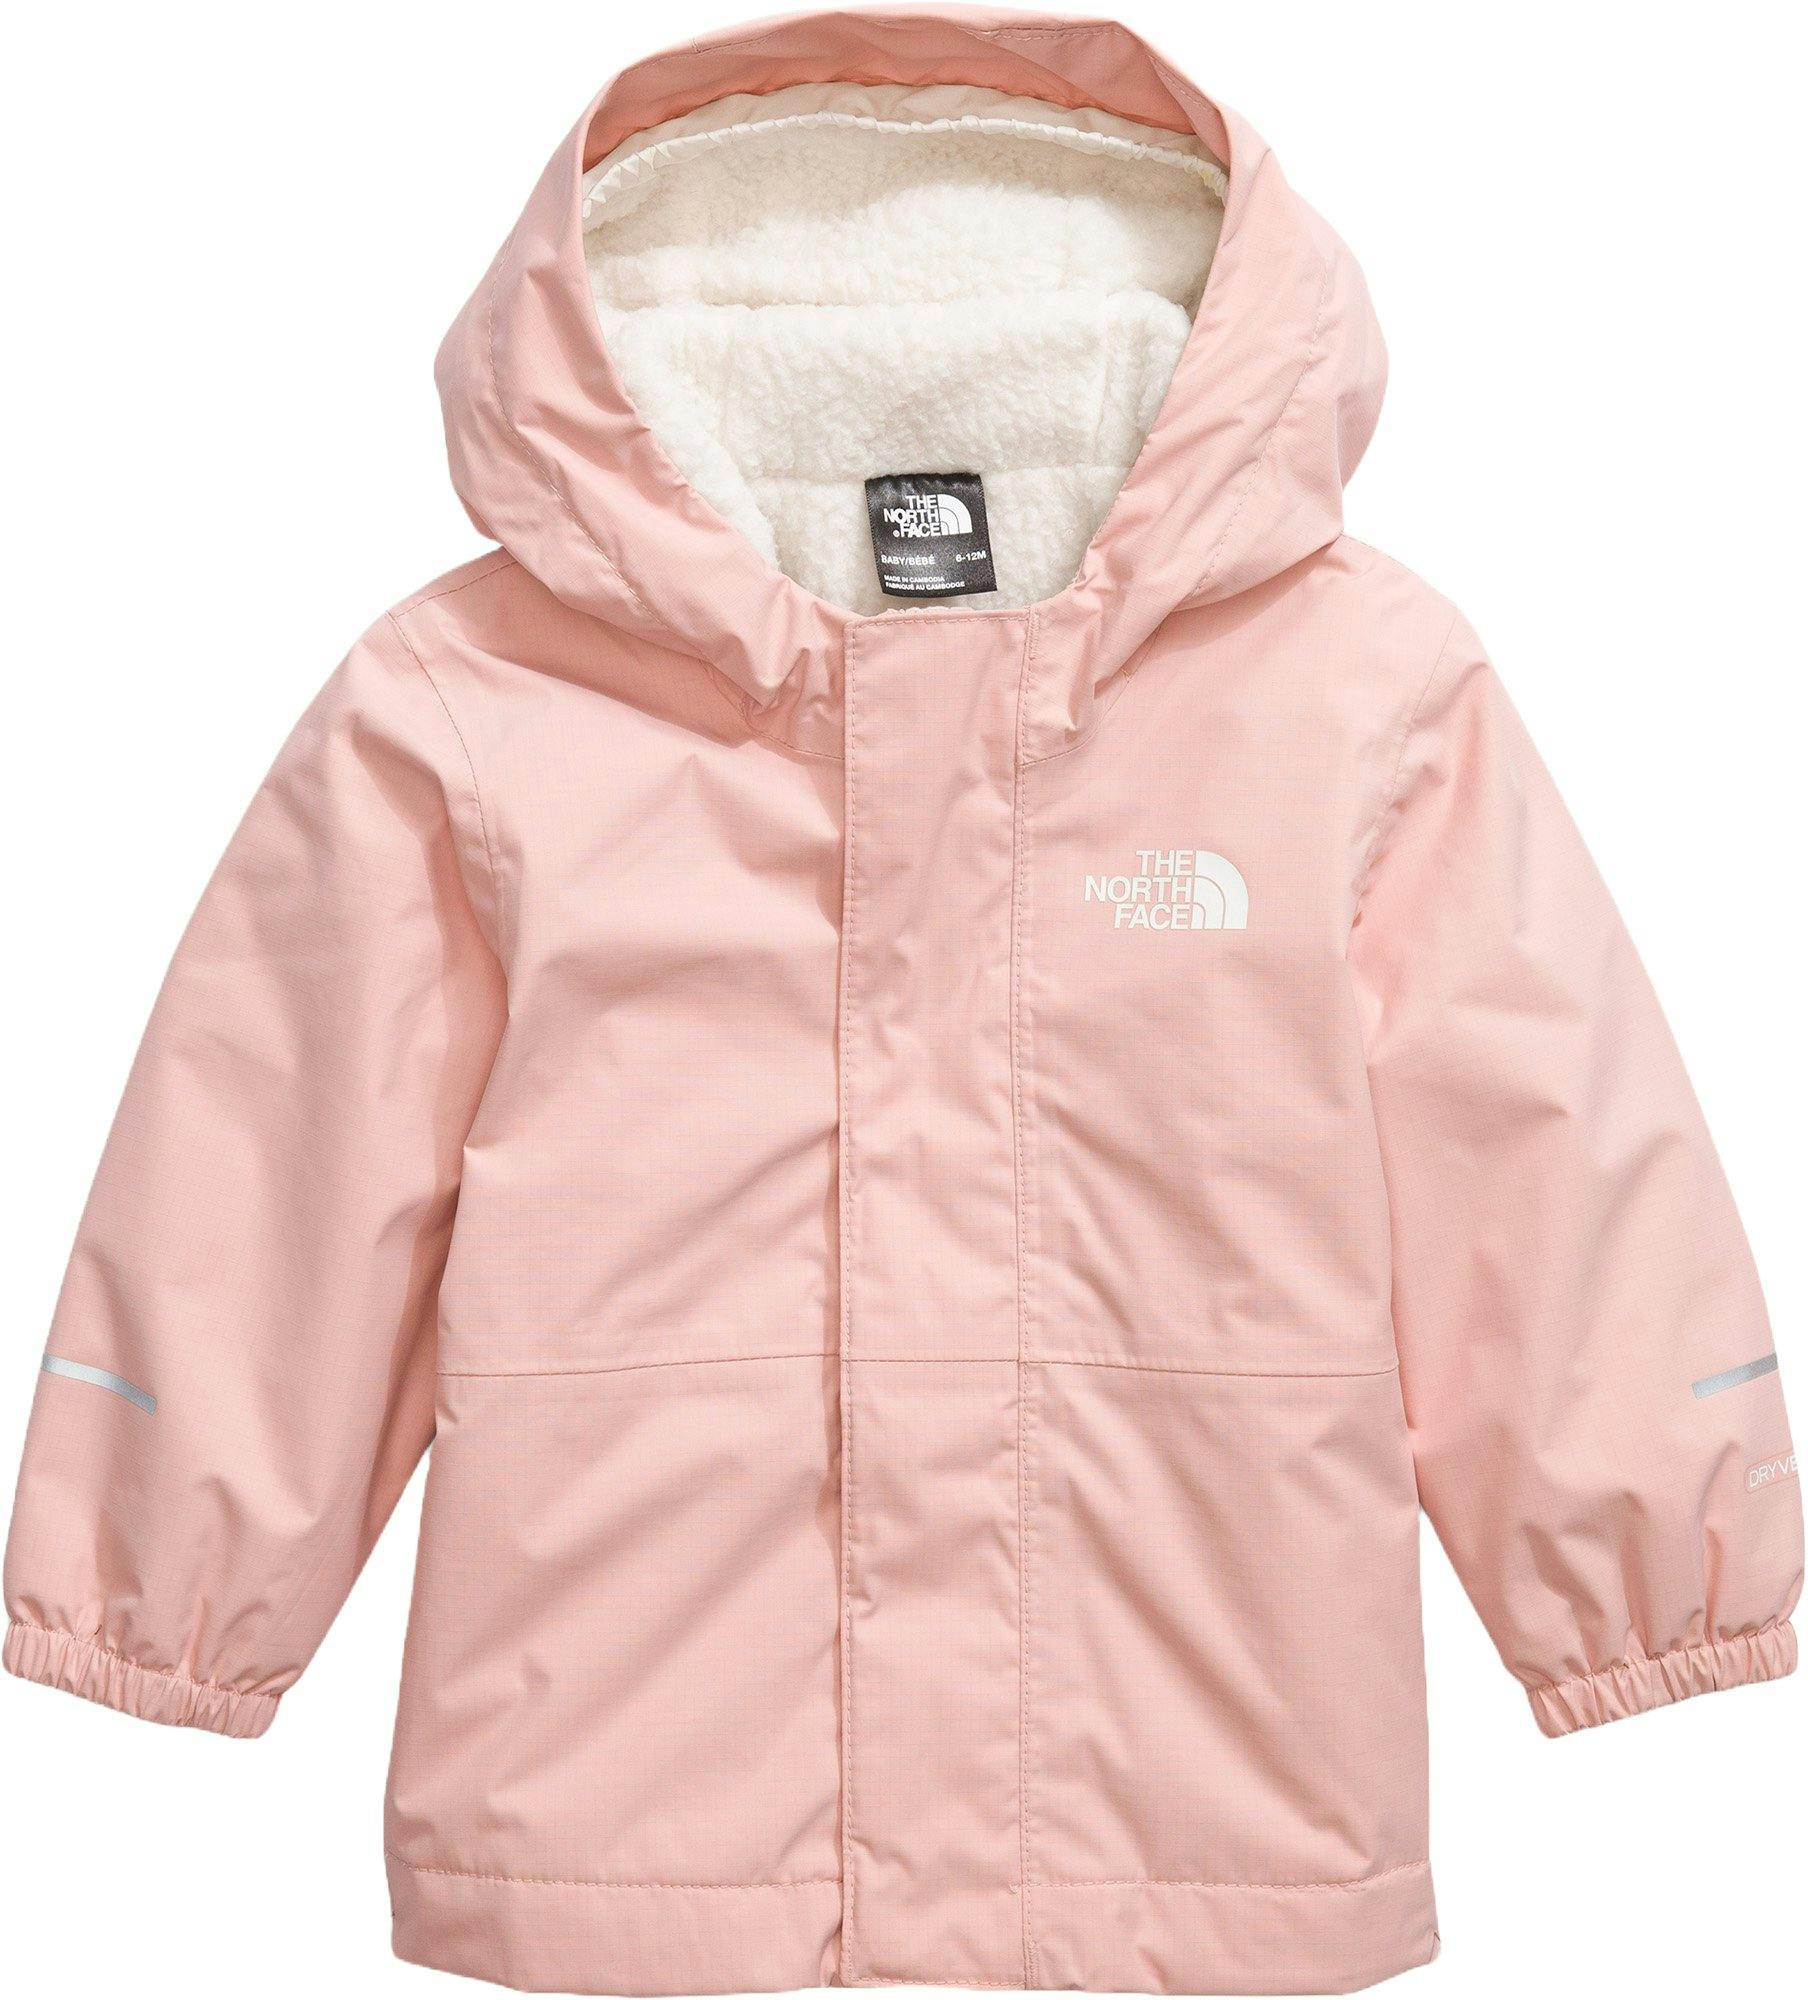 Product image for Warm Antora Rain Jacket - Baby